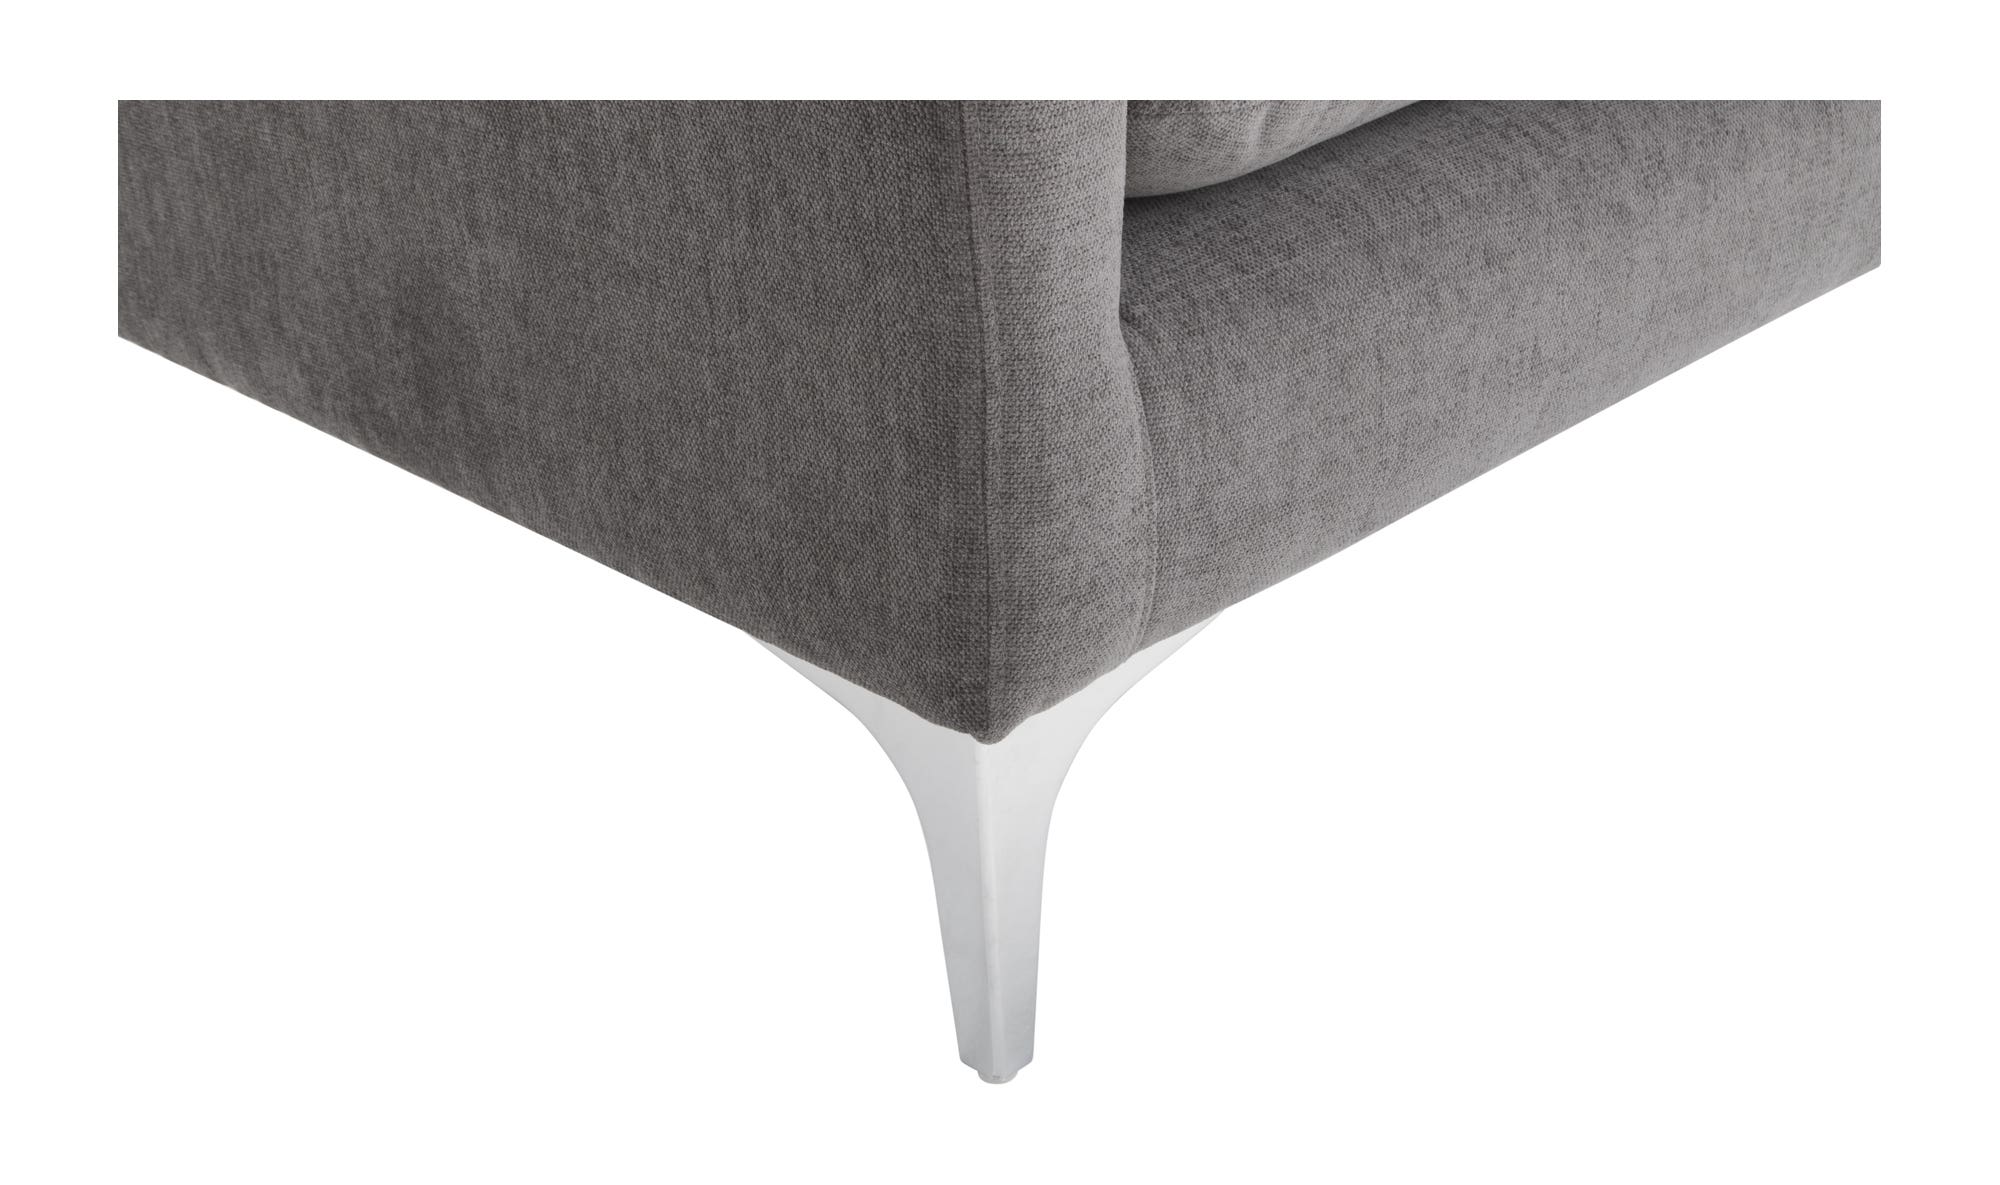 Sofa with Removable Cushions: Modern Sleeper Luxury